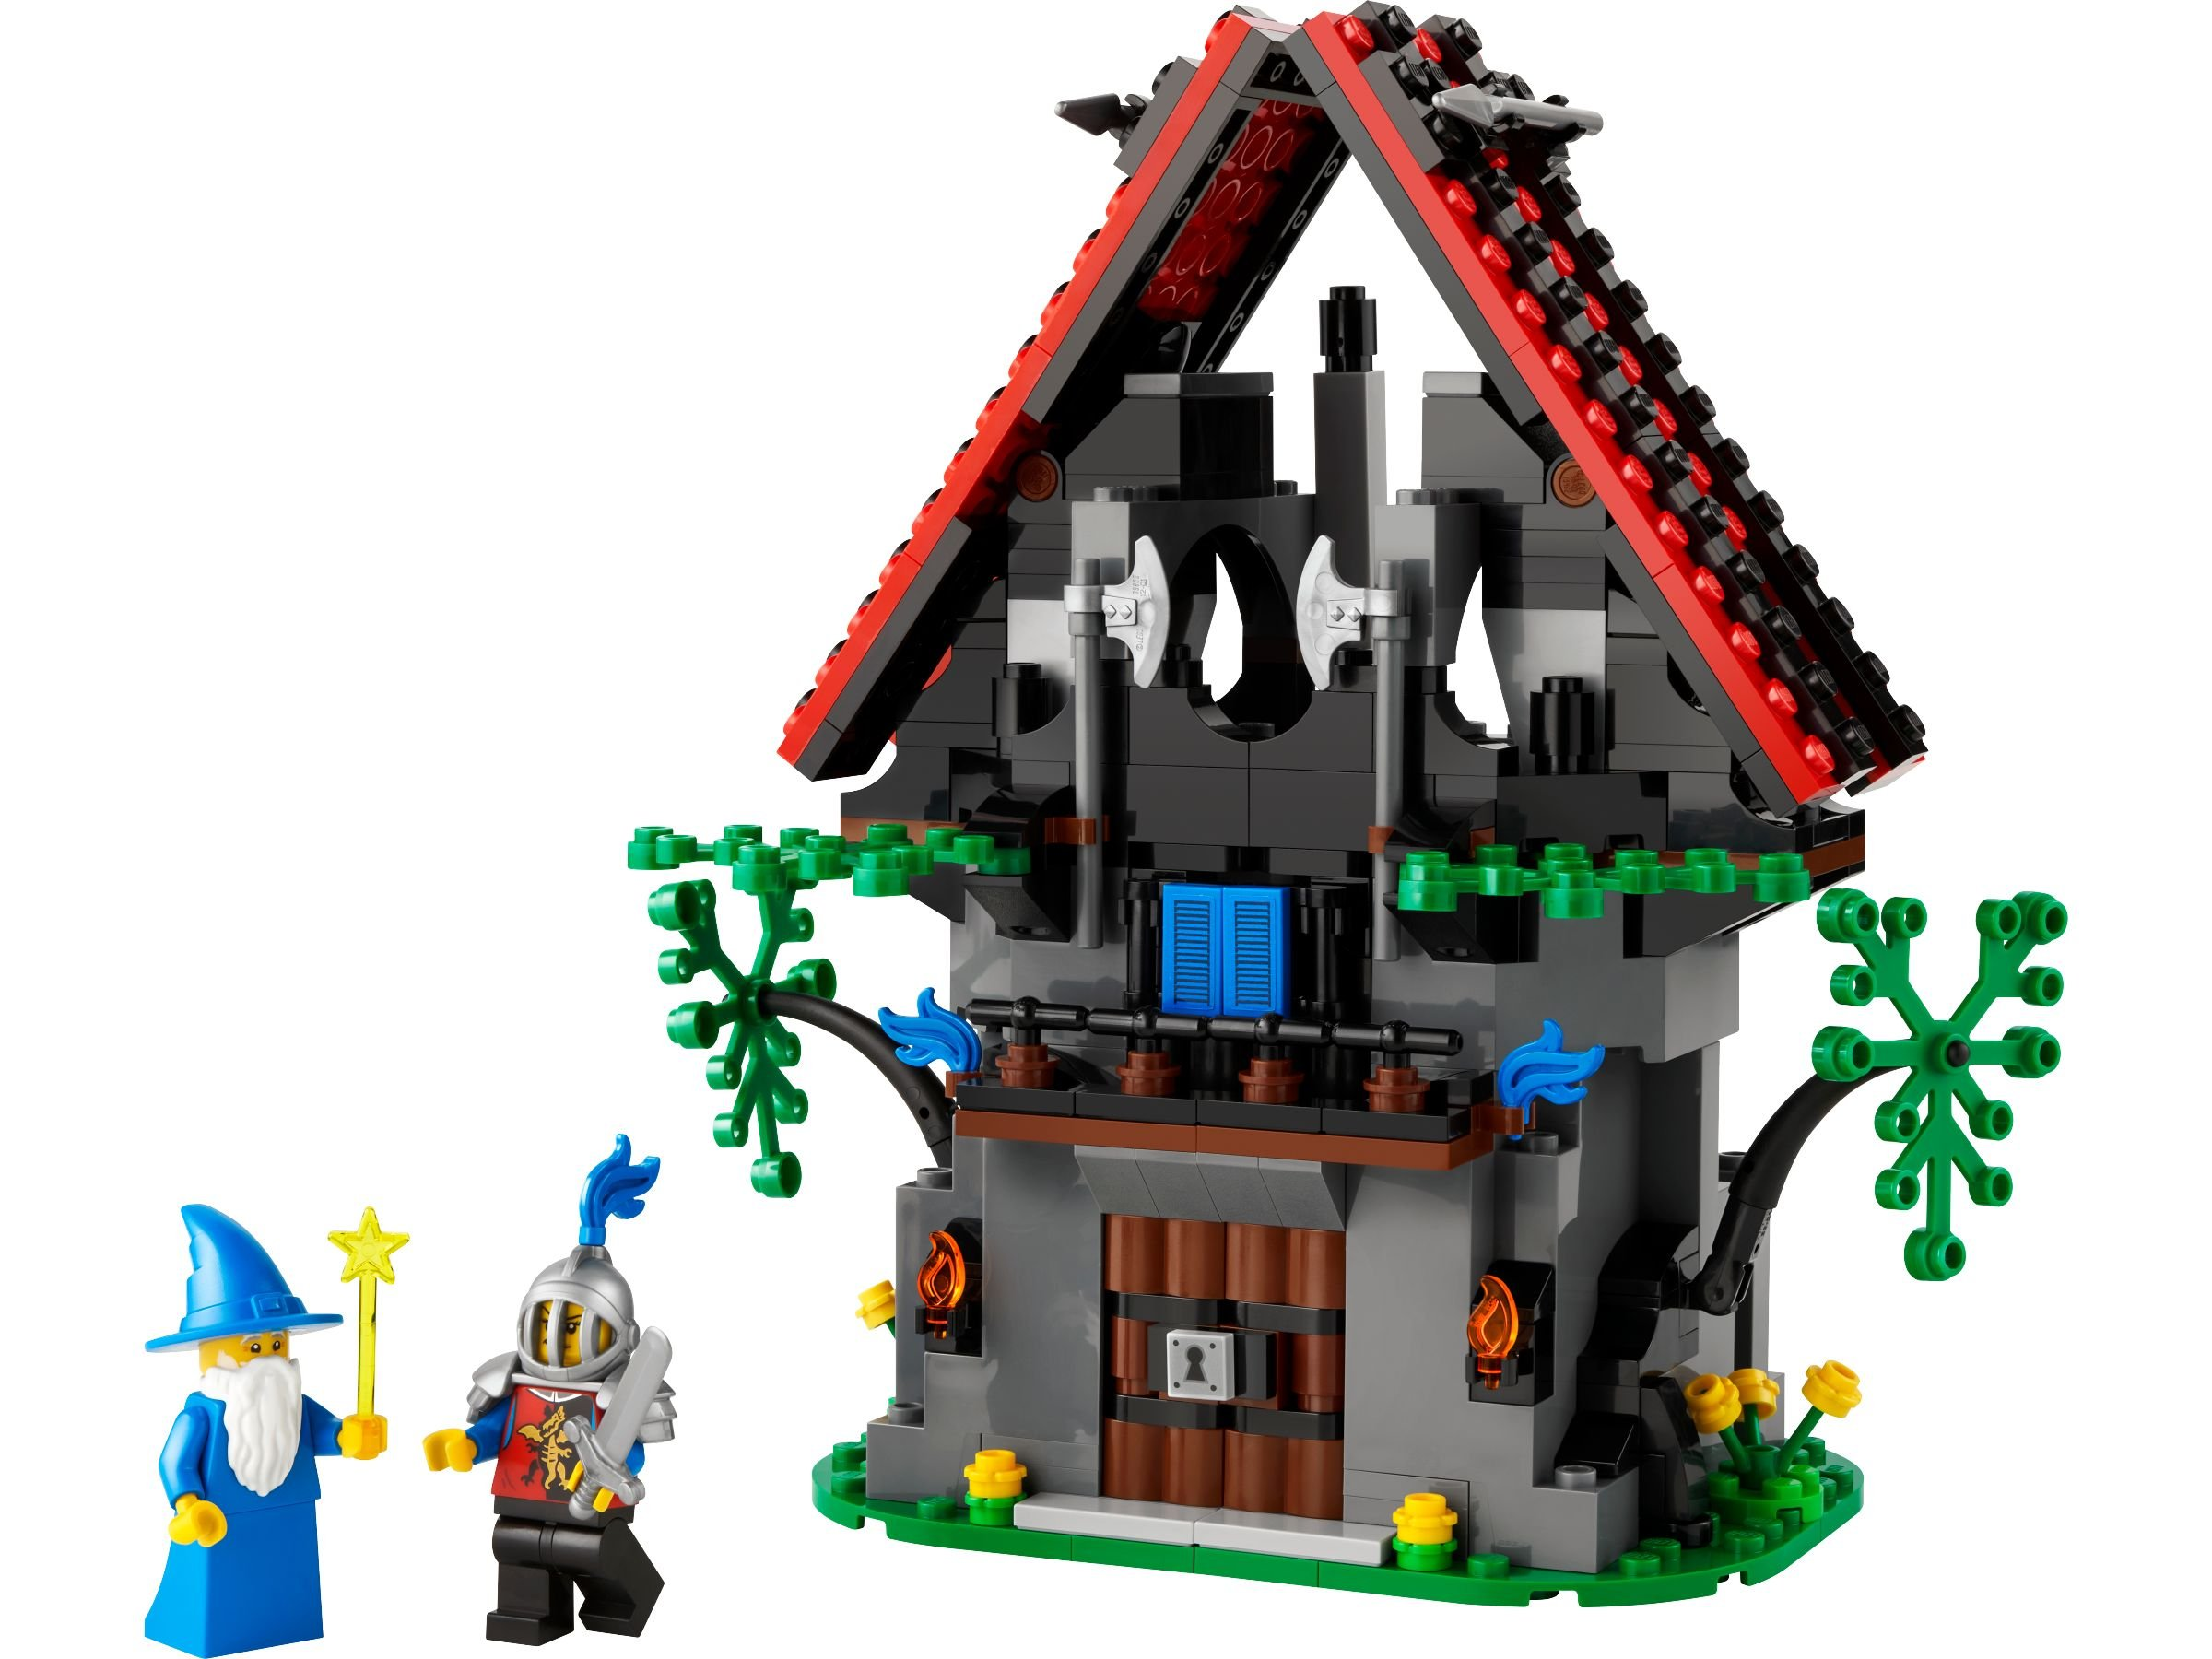 LEGO 40601 Zauberwerkstatt Majistos Bausatz